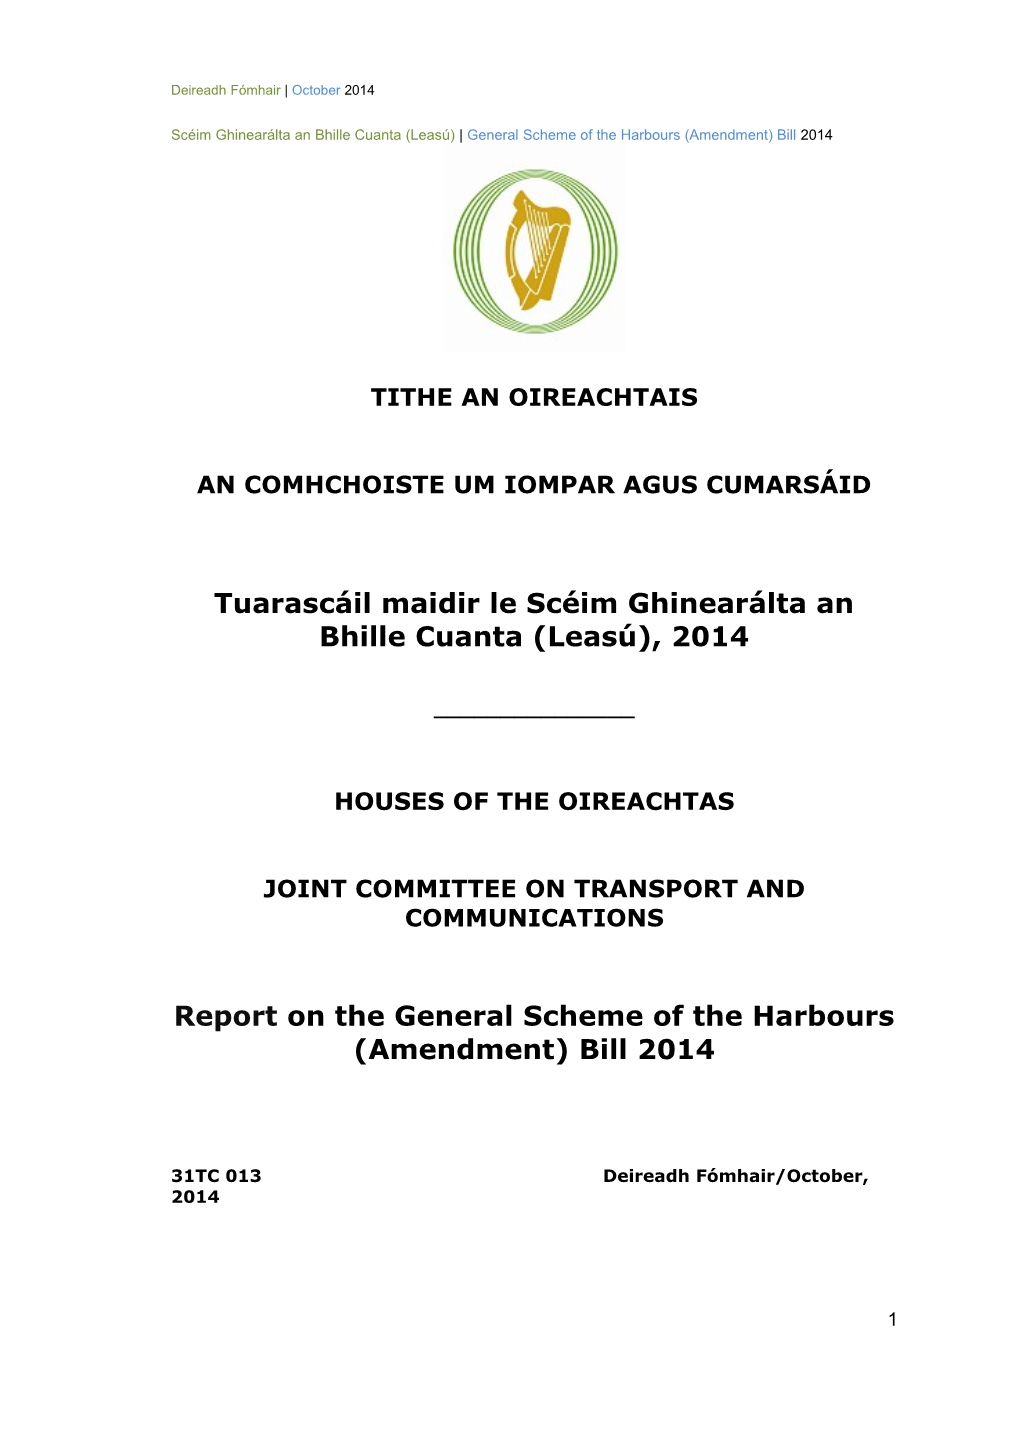 Scéim Ghinearálta an Bhille Cuanta (Leasú) General Scheme of the Harbours (Amendment) Bill 2014